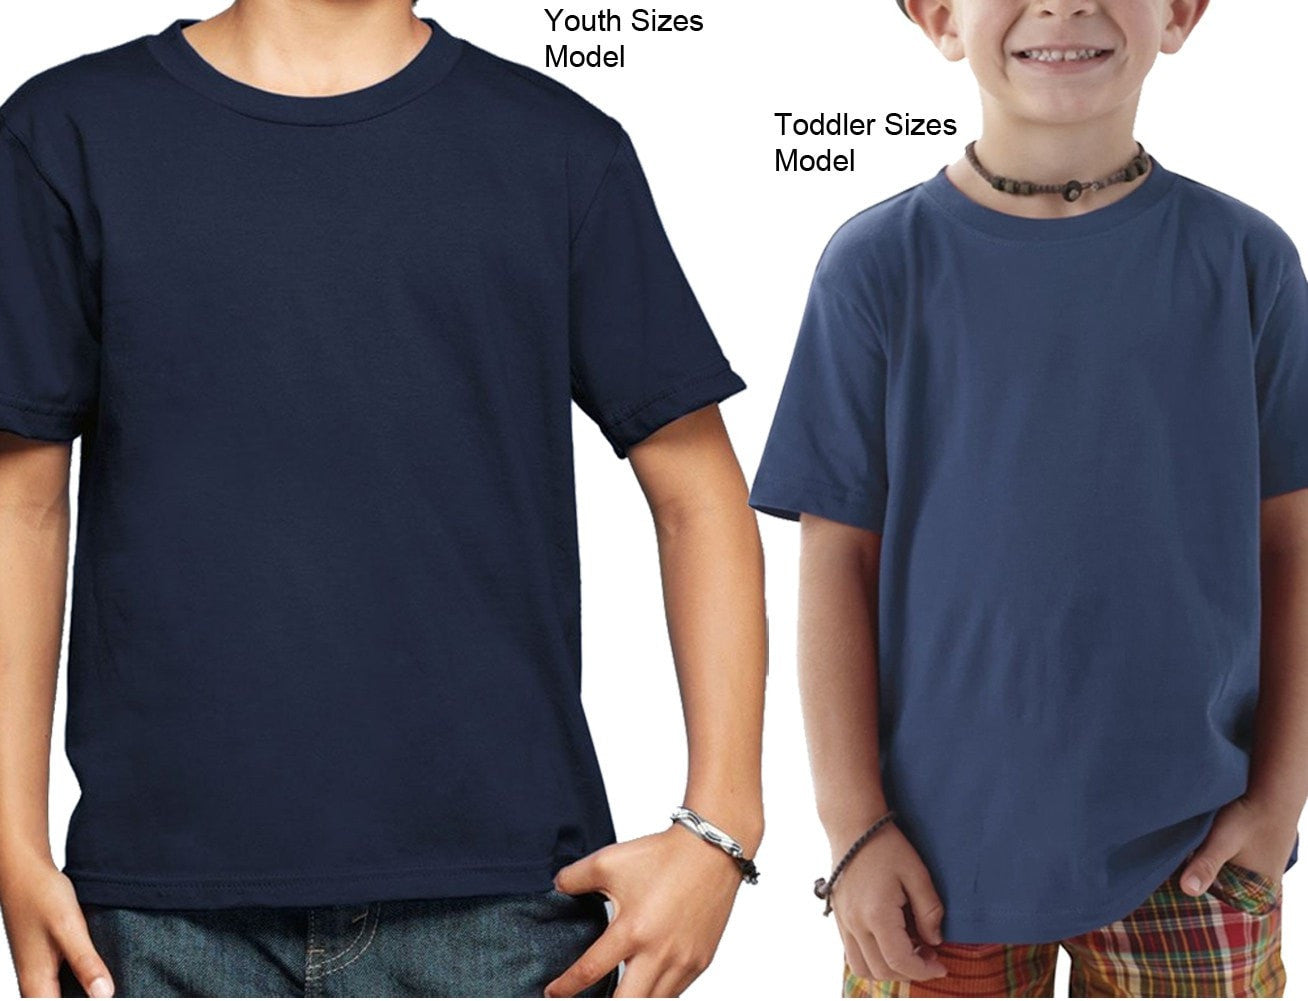 Boy's Saturn T-Shirt Astronomy